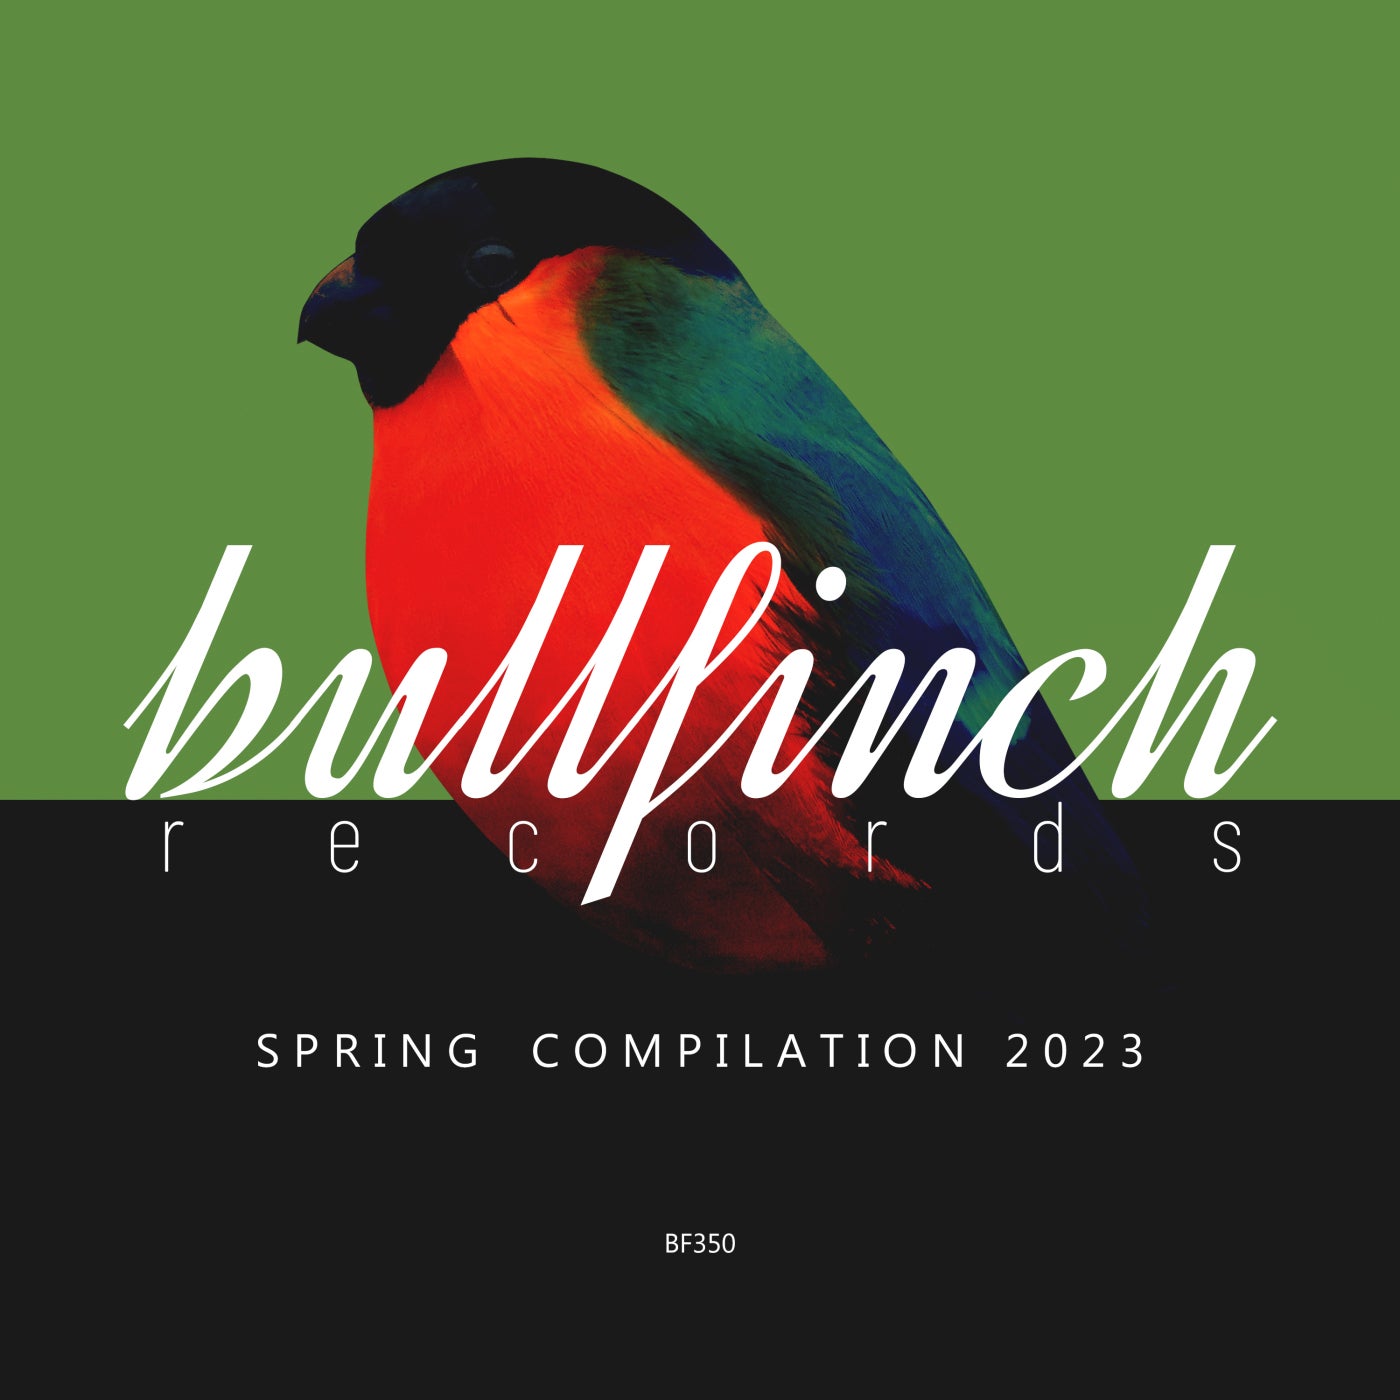 Hadiid, Whistral – Bullfinch Spring 2023 Compilation [BF350]